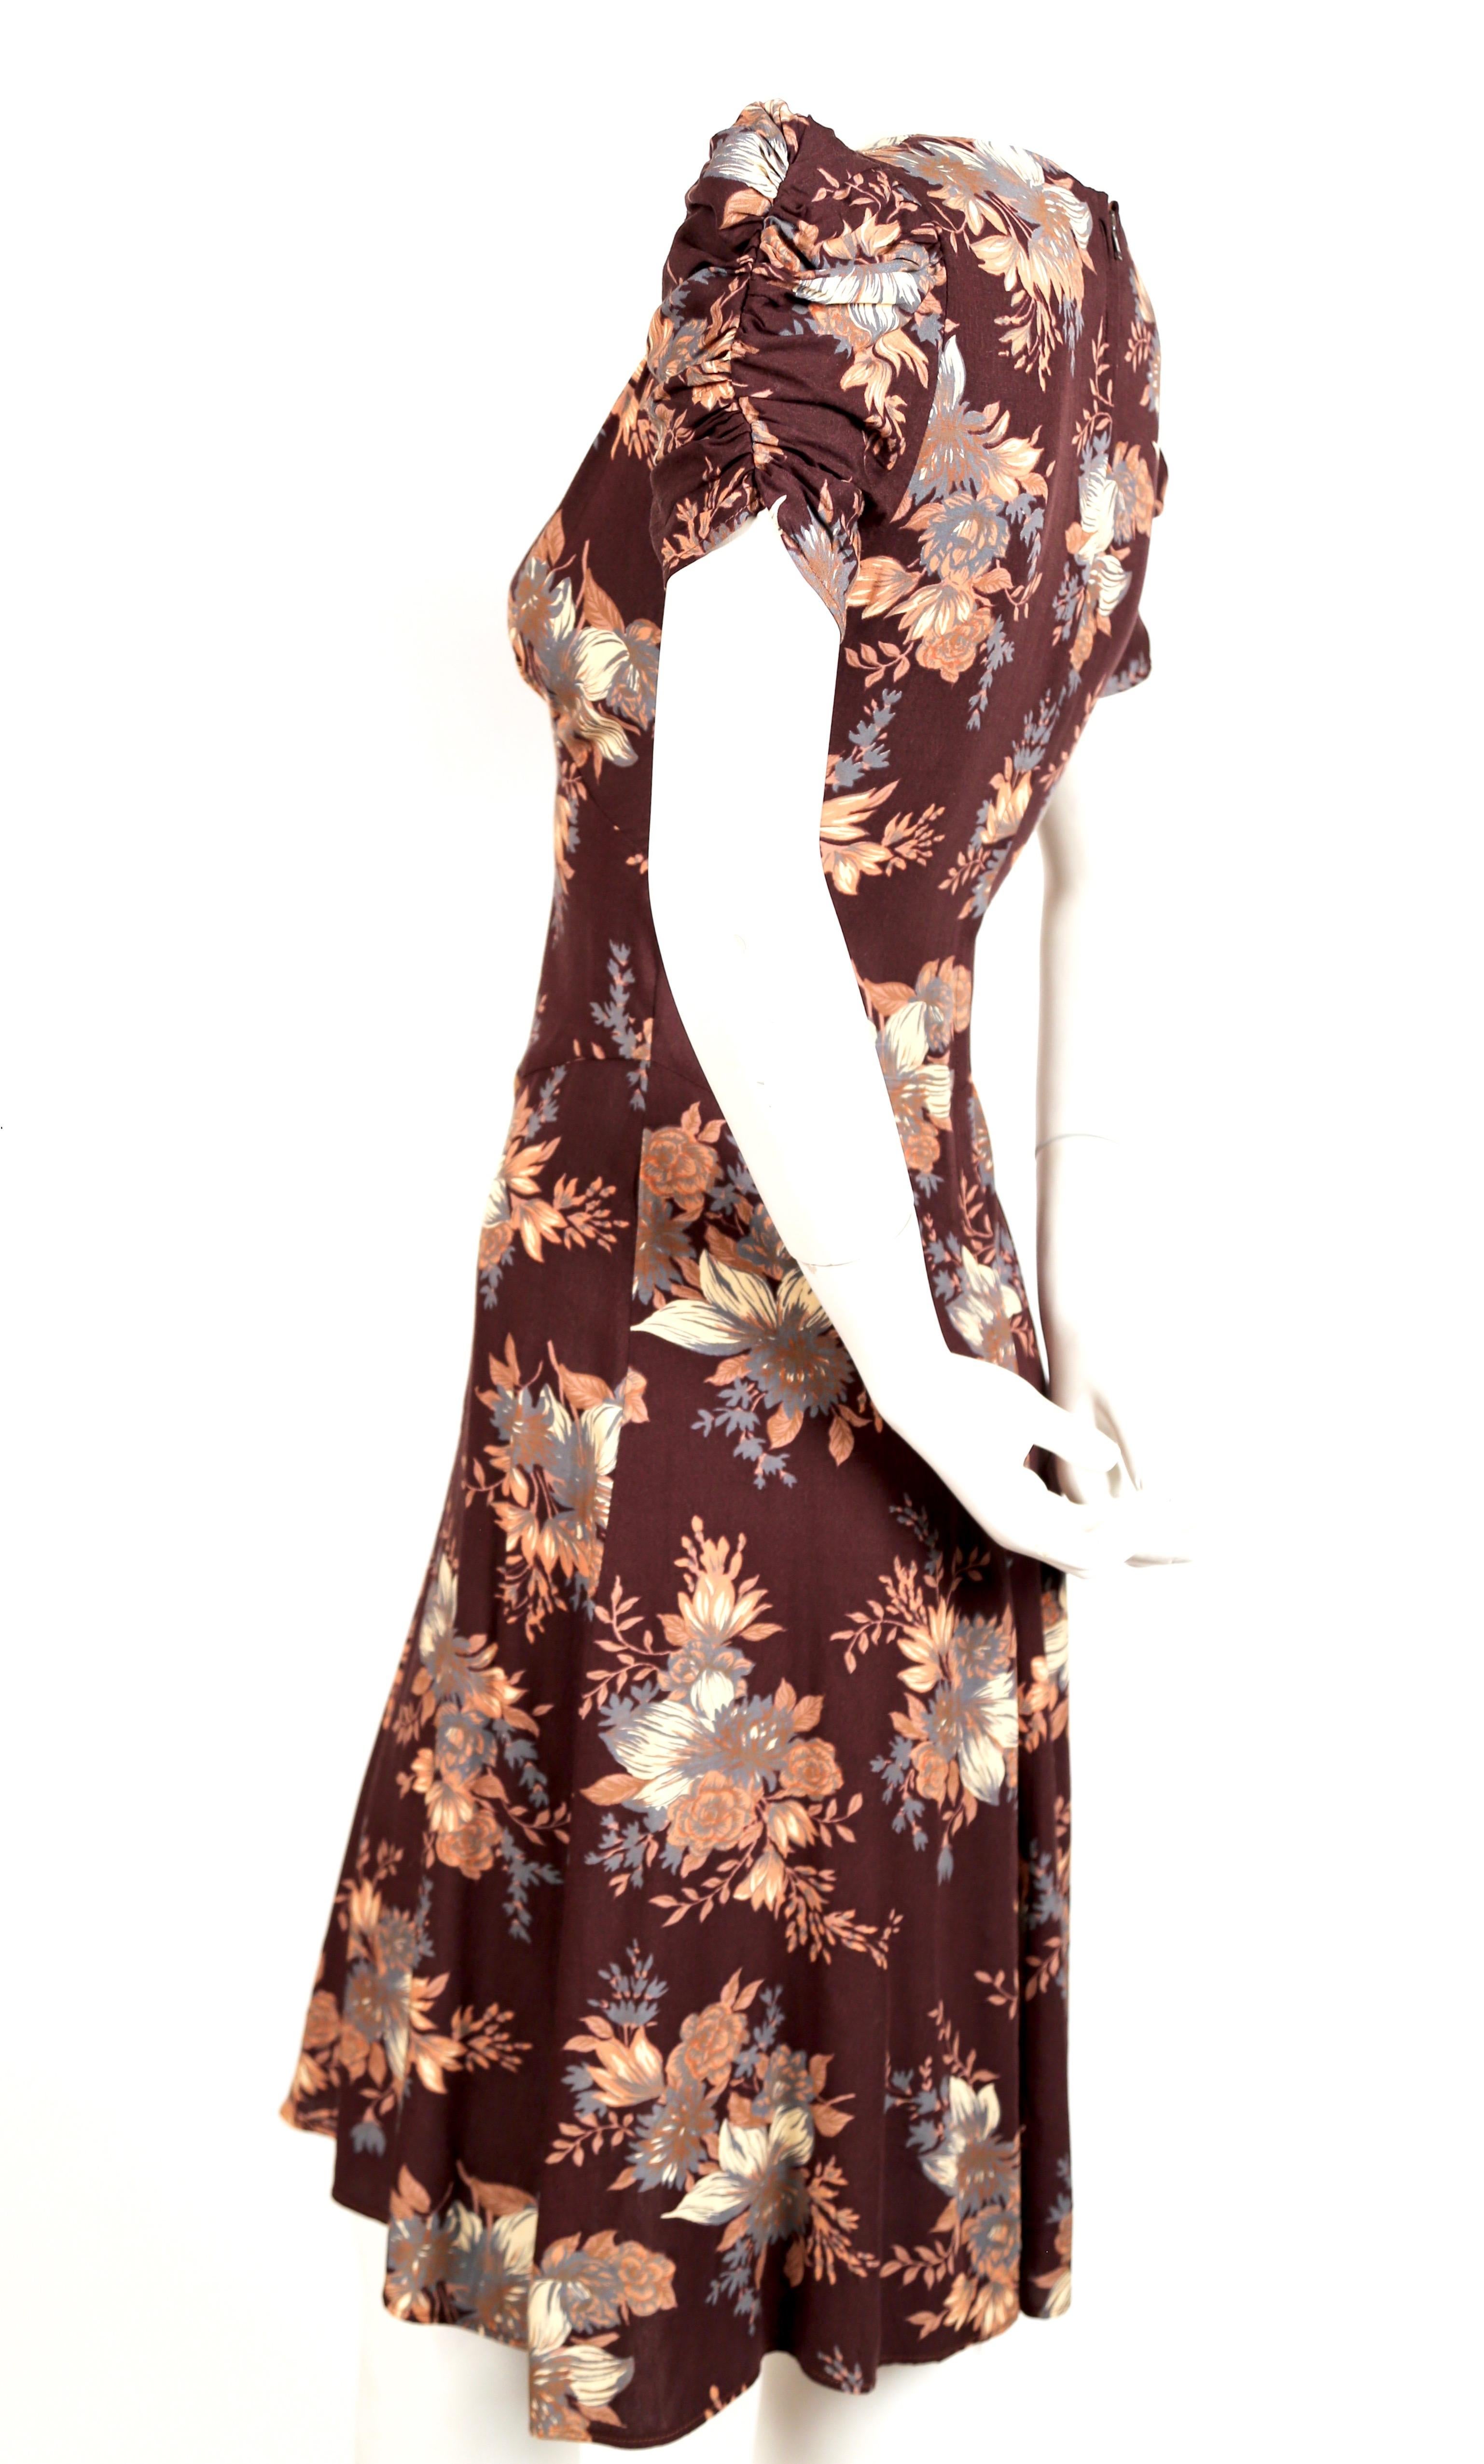 brown floral dress